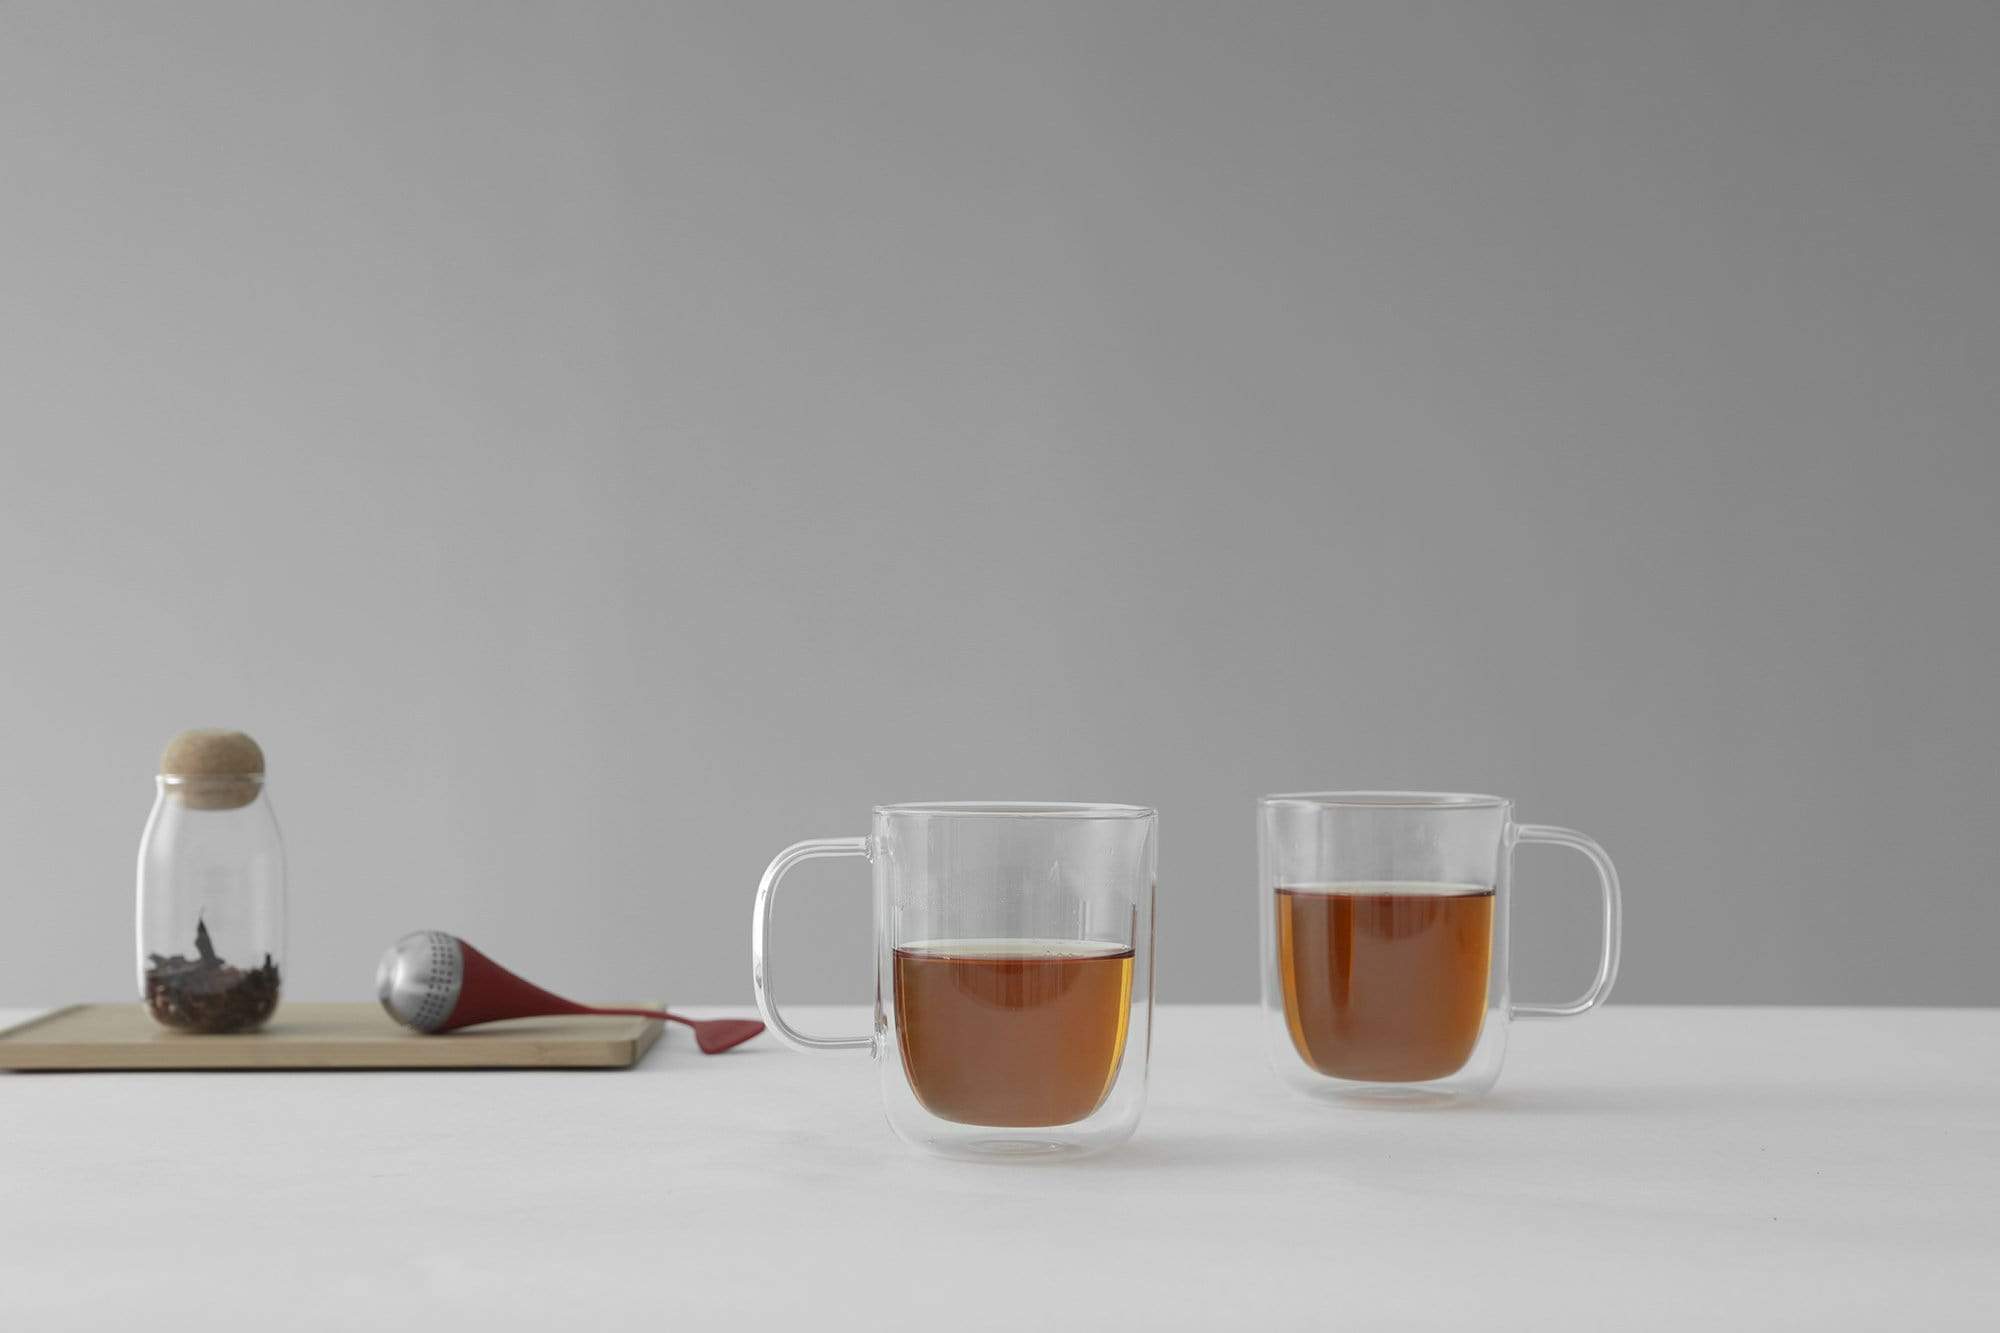 Mug double paroi avec couvercle en verre - 350ml - BIELO TUMBLER - Vertlapub